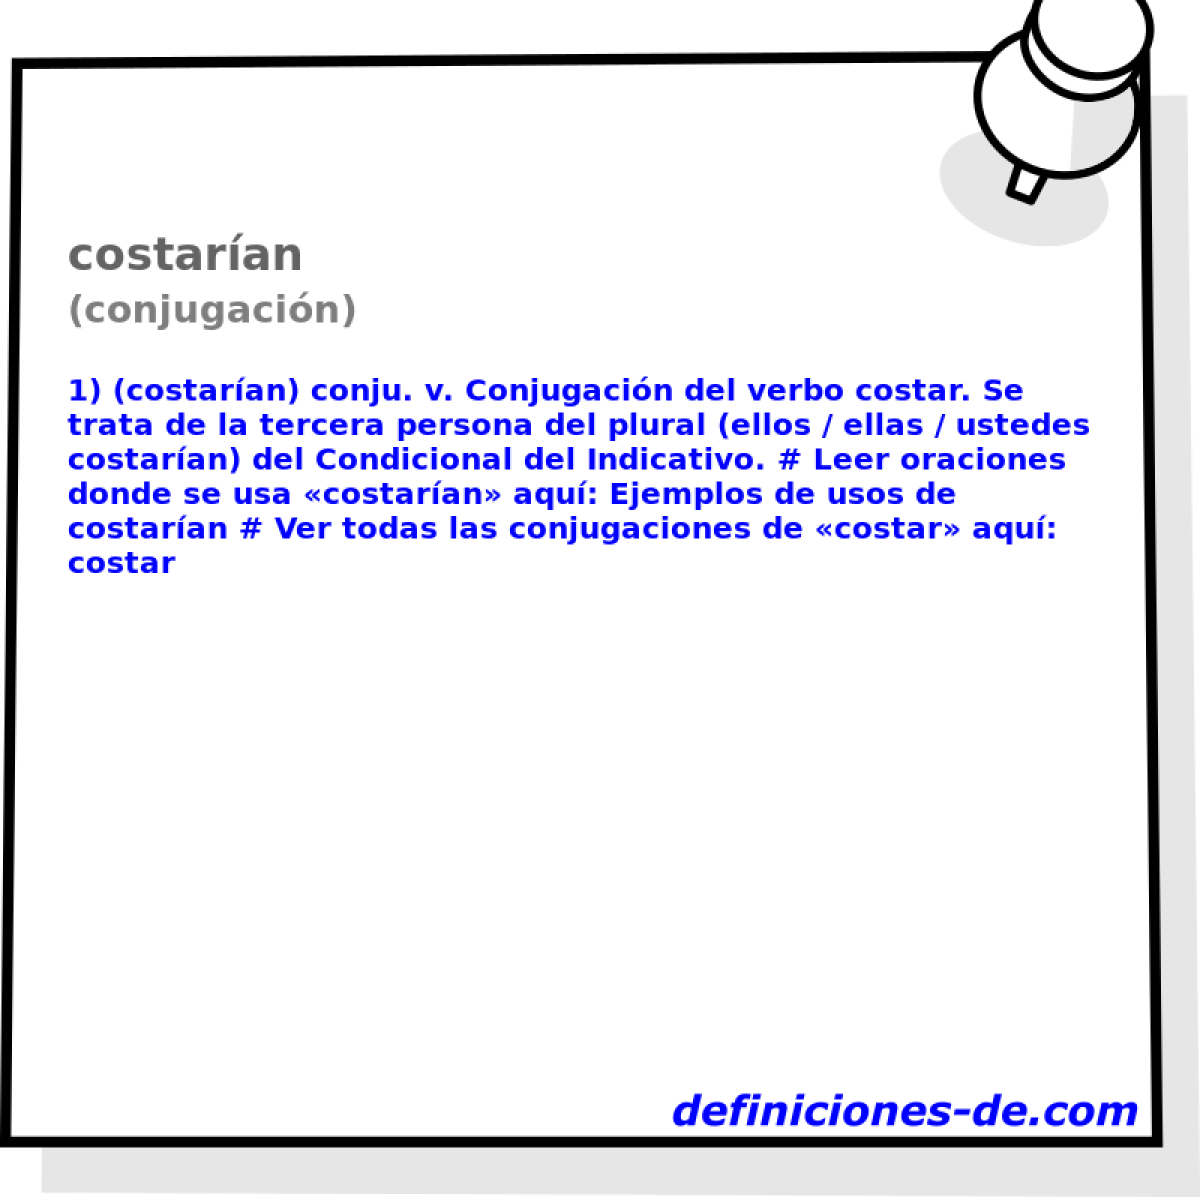 costaran (conjugacin)